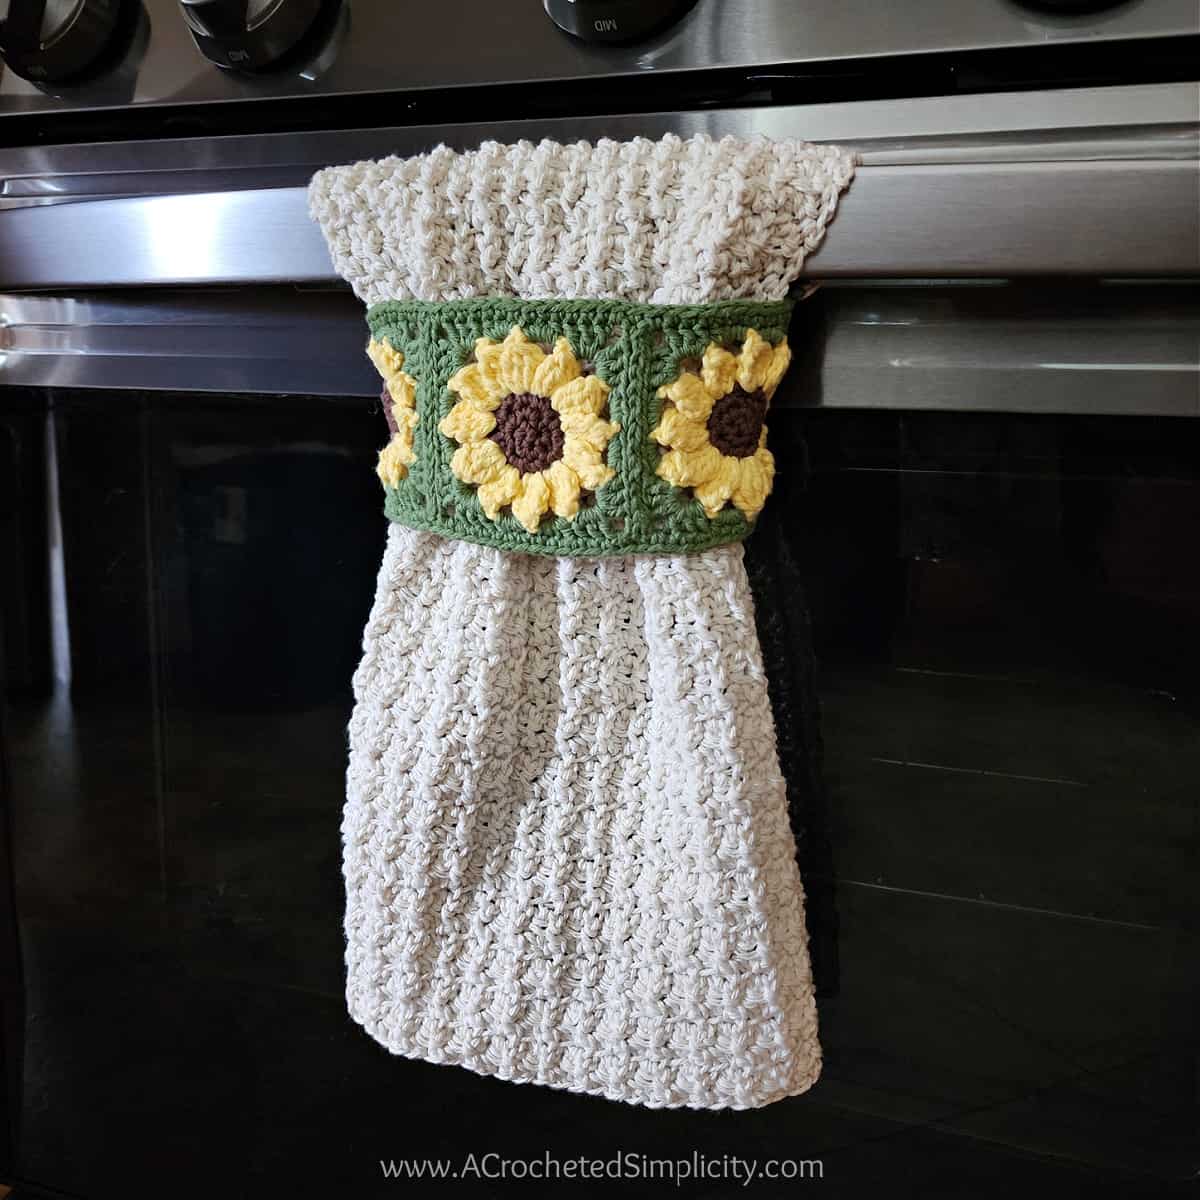 Crochet Spot » Blog Archive » Free Crochet Pattern: How to Make